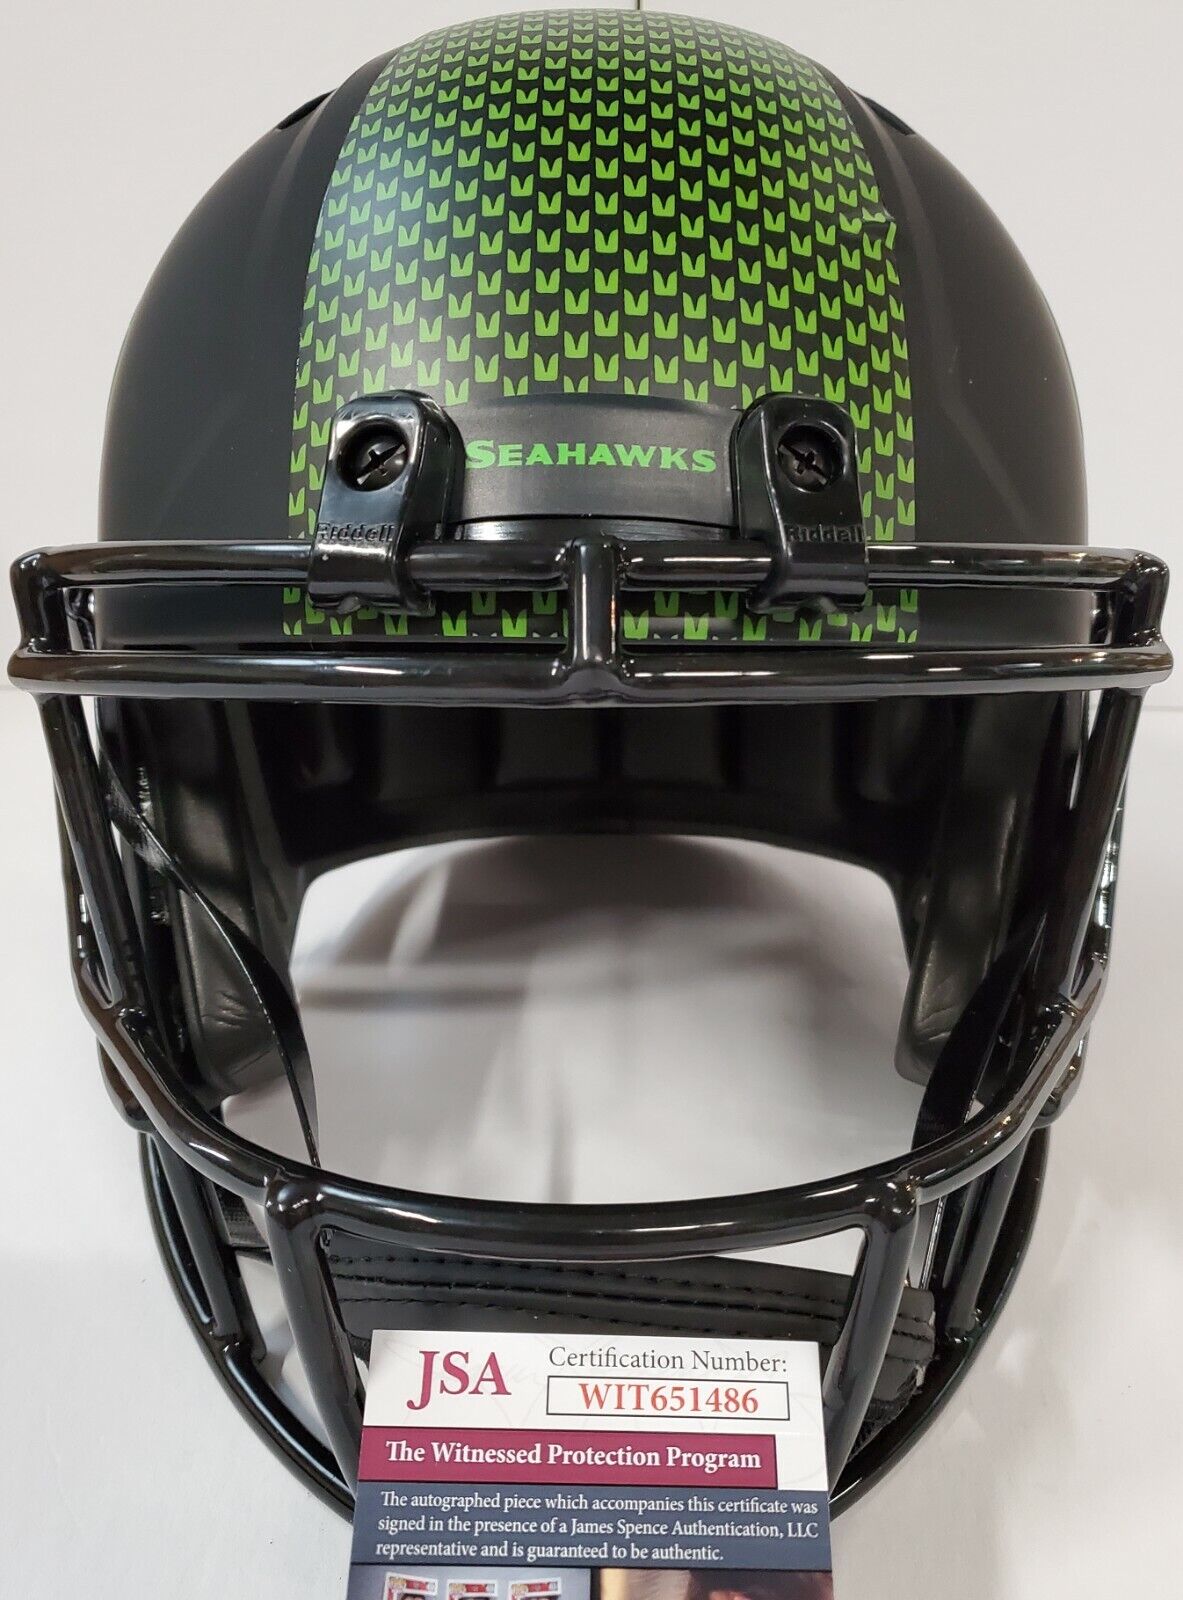 MVP Authentics Seattle Seahawks Bobby Engram Autographed Full Sz Eclipse Replica Helmet Jsa Coa 369 sports jersey framing , jersey framing